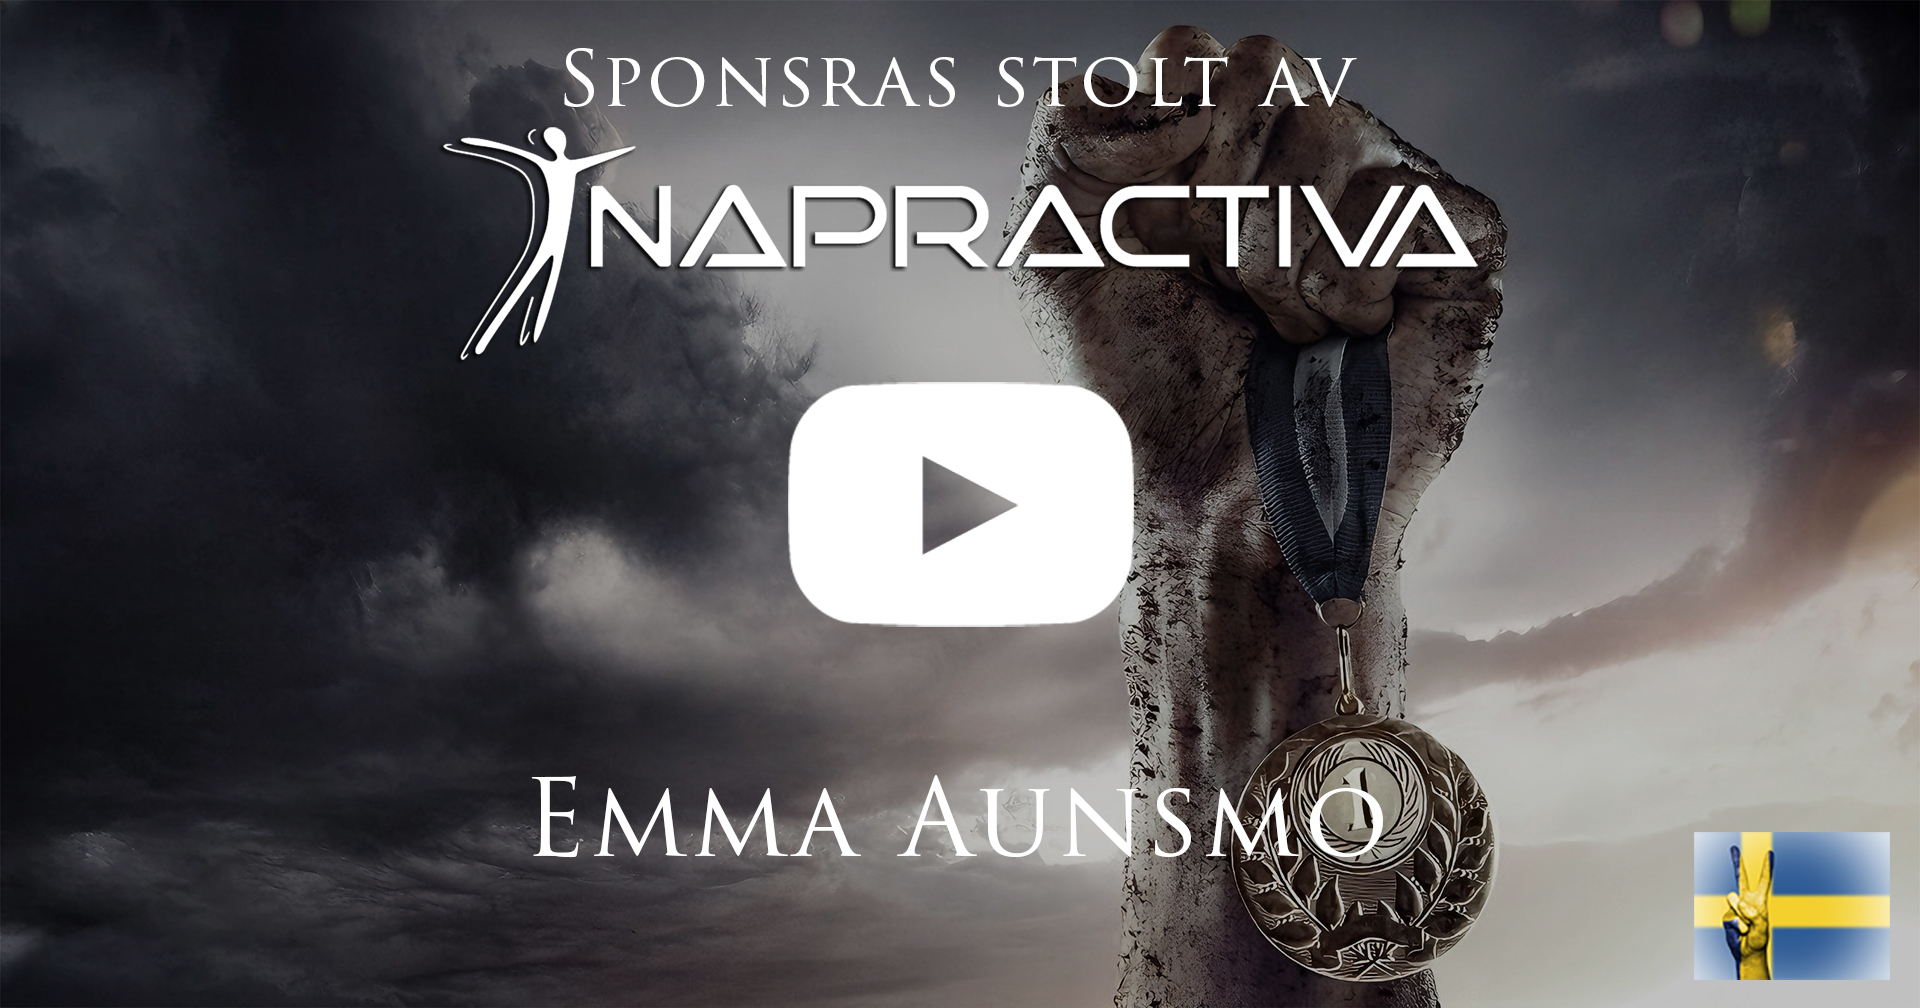 Sponsras stolt av Napractiva - Stockholms naprapat: Emma Aunsmo!